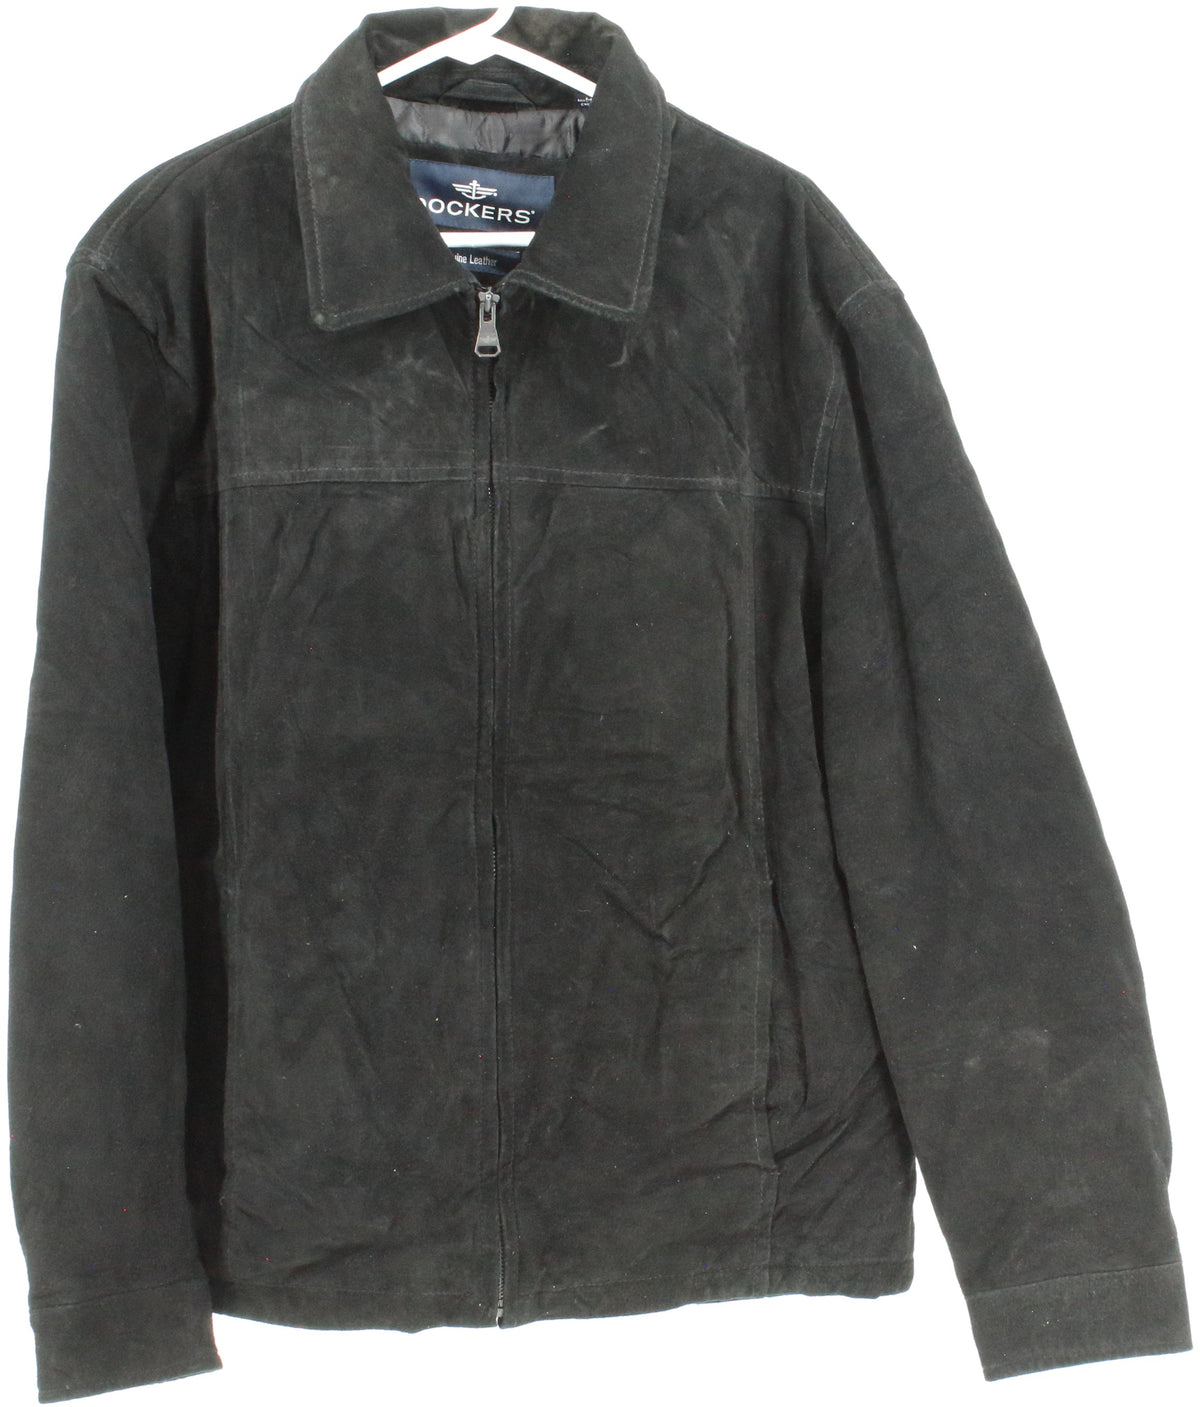 Dockers Black Leather Jacket